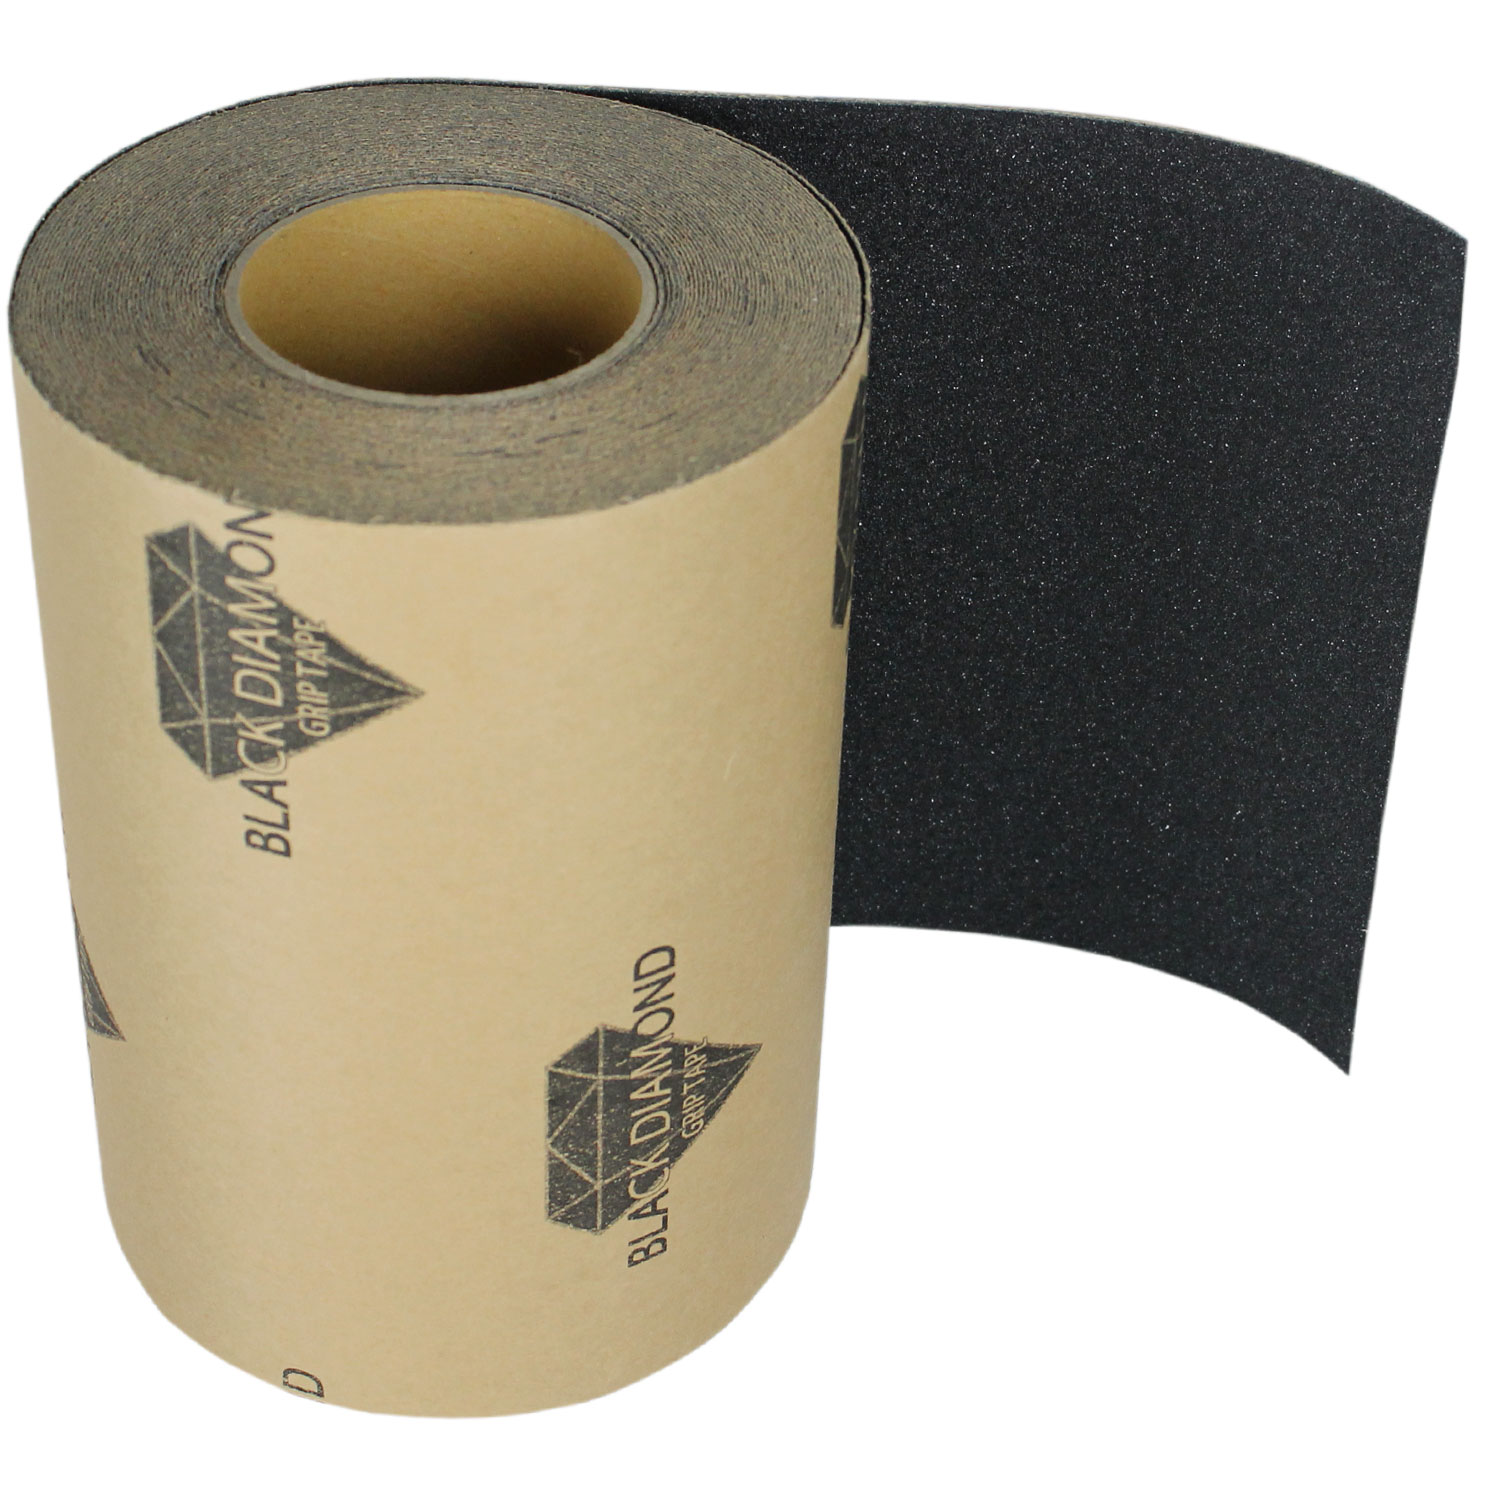 10 inch skateboard grip tape